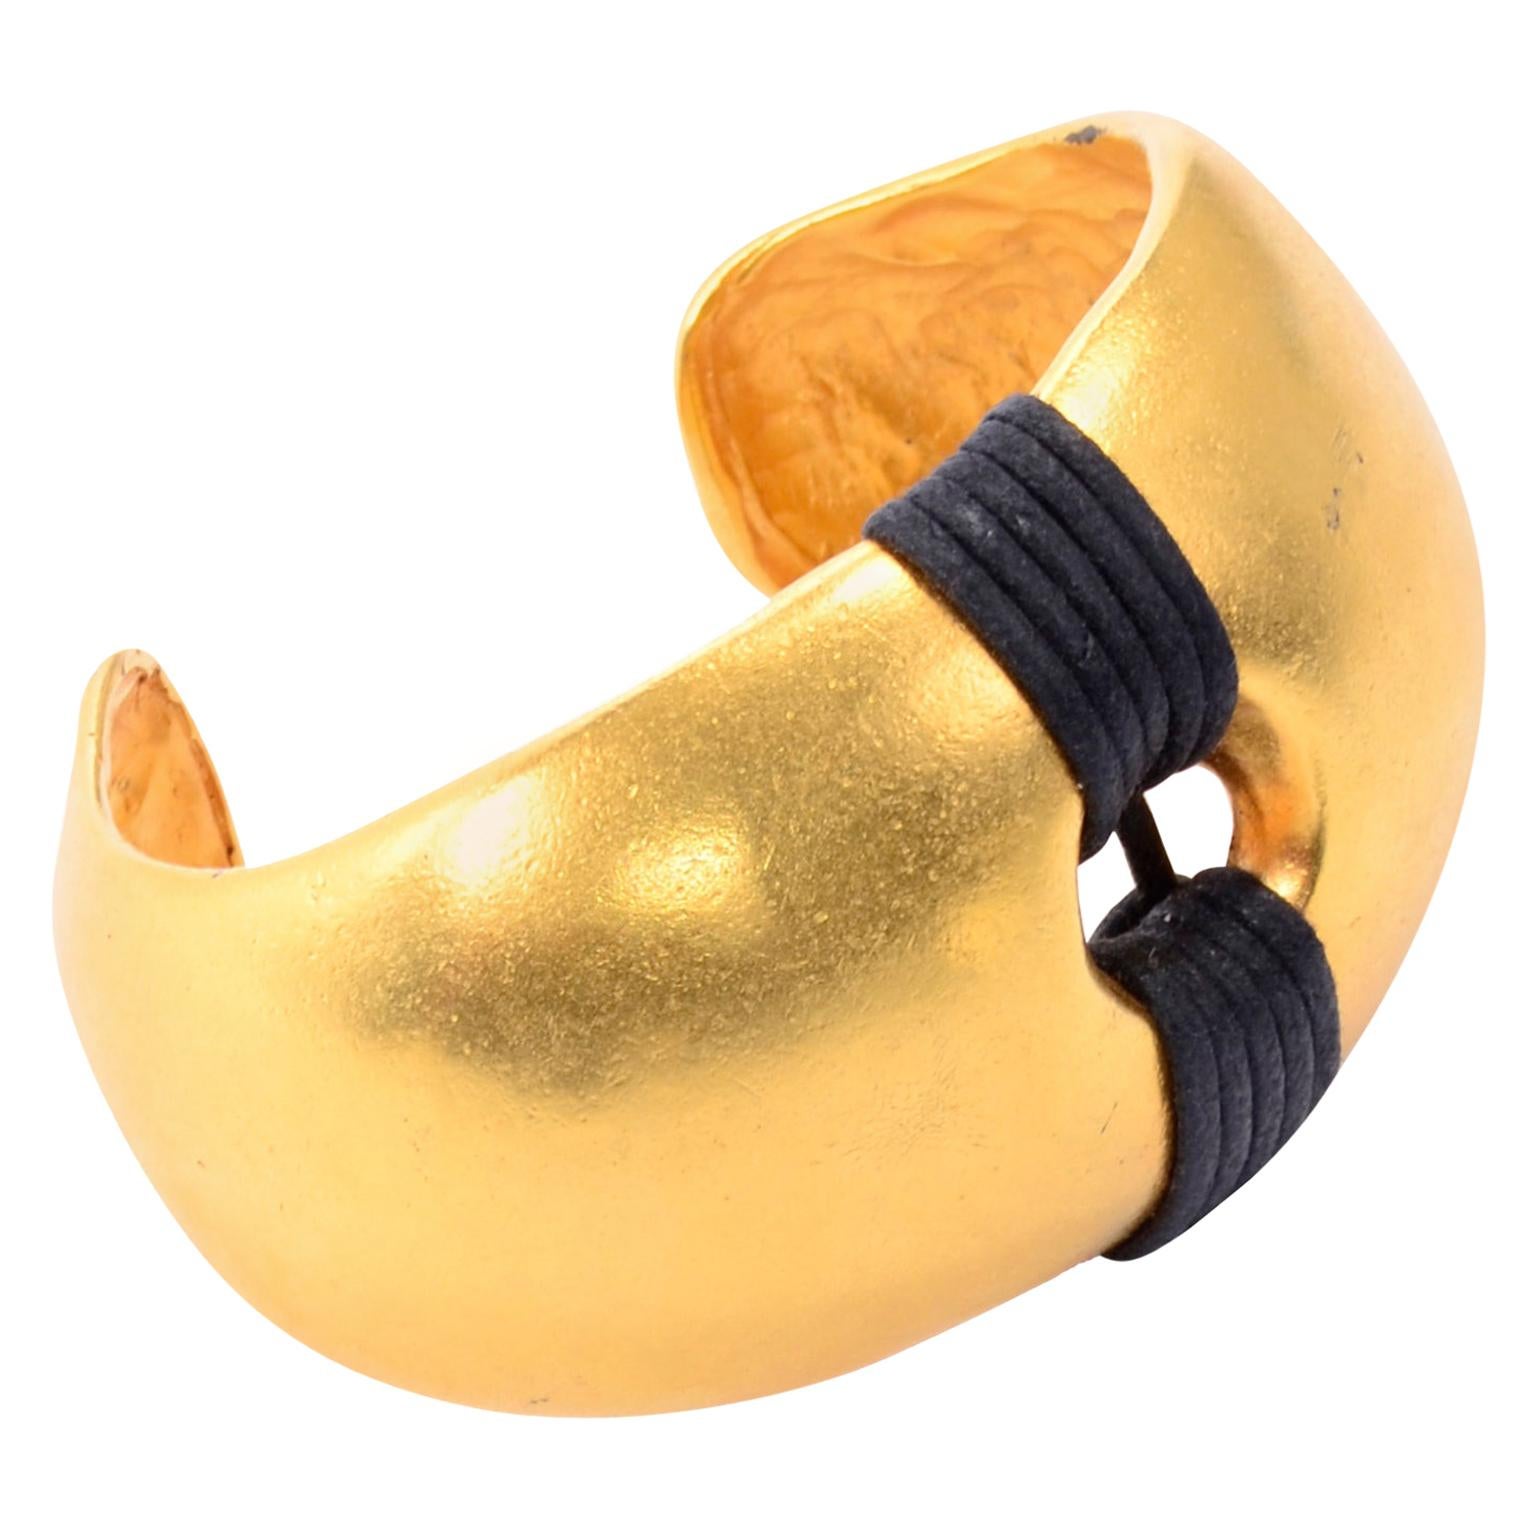 1980s Vintage Gold Plated Cuff Modern Bracelet With Black Band Details